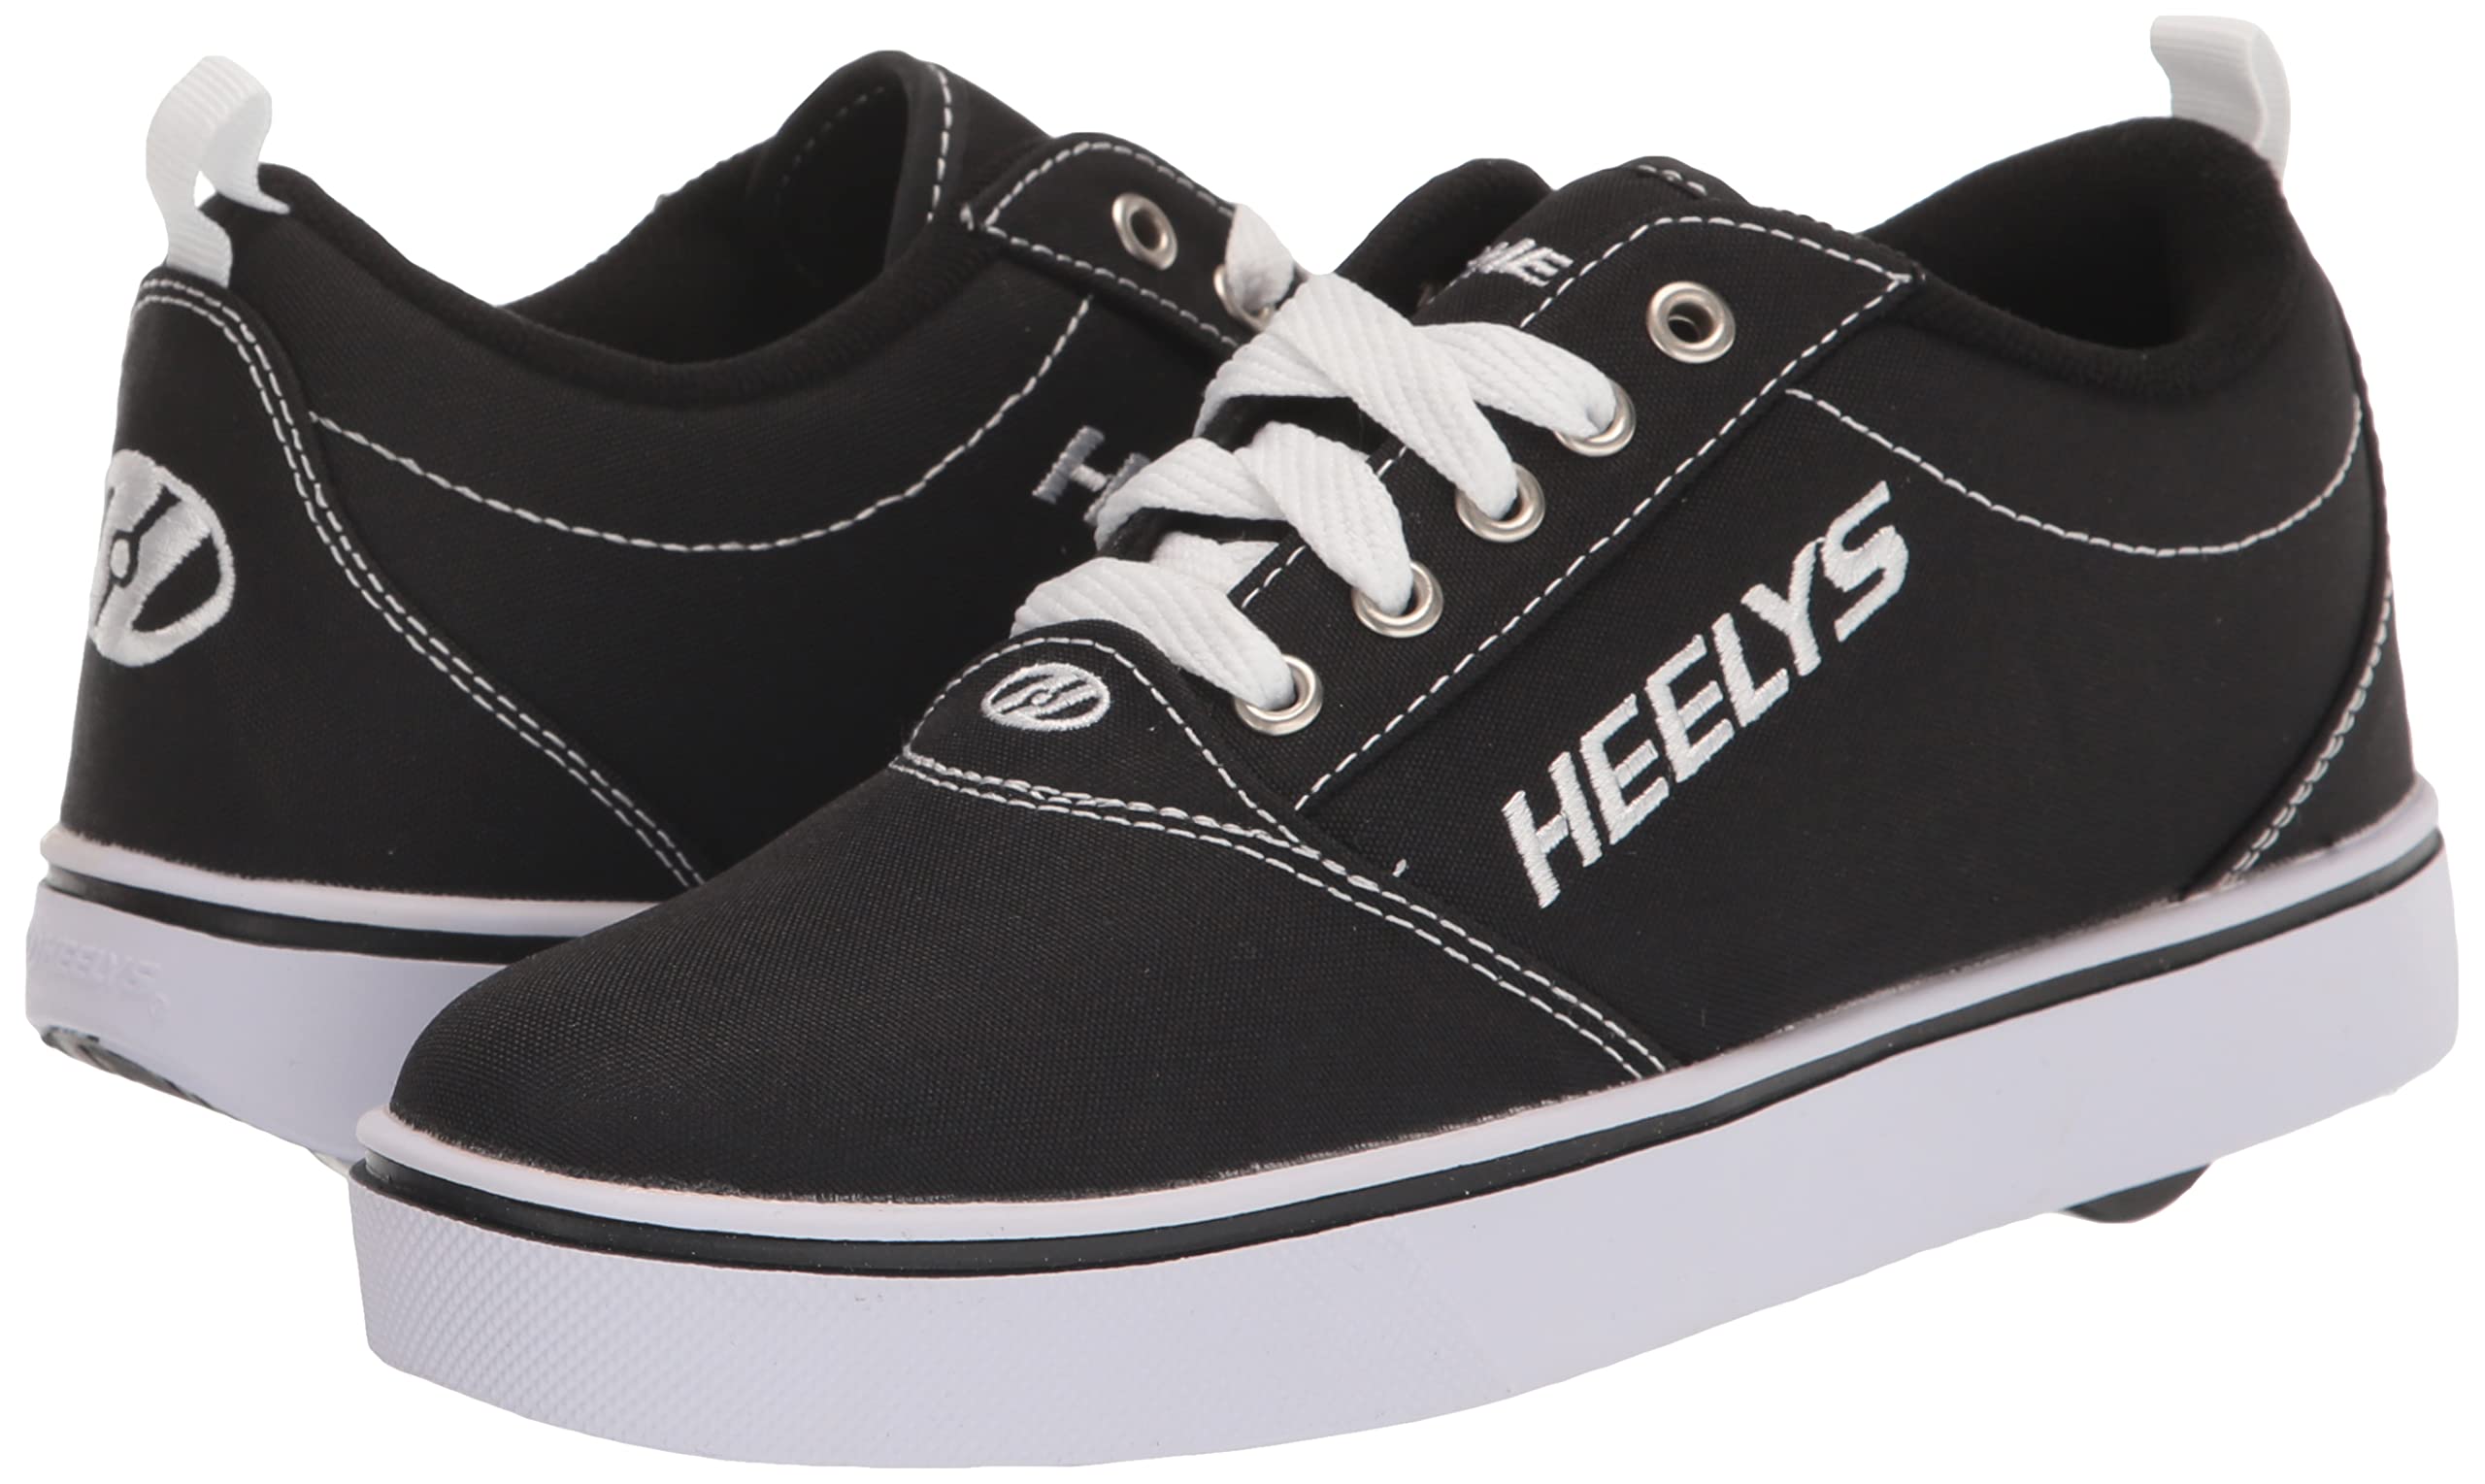 Heelys Unisex-Child Footwear Wheeled Heel Shoe